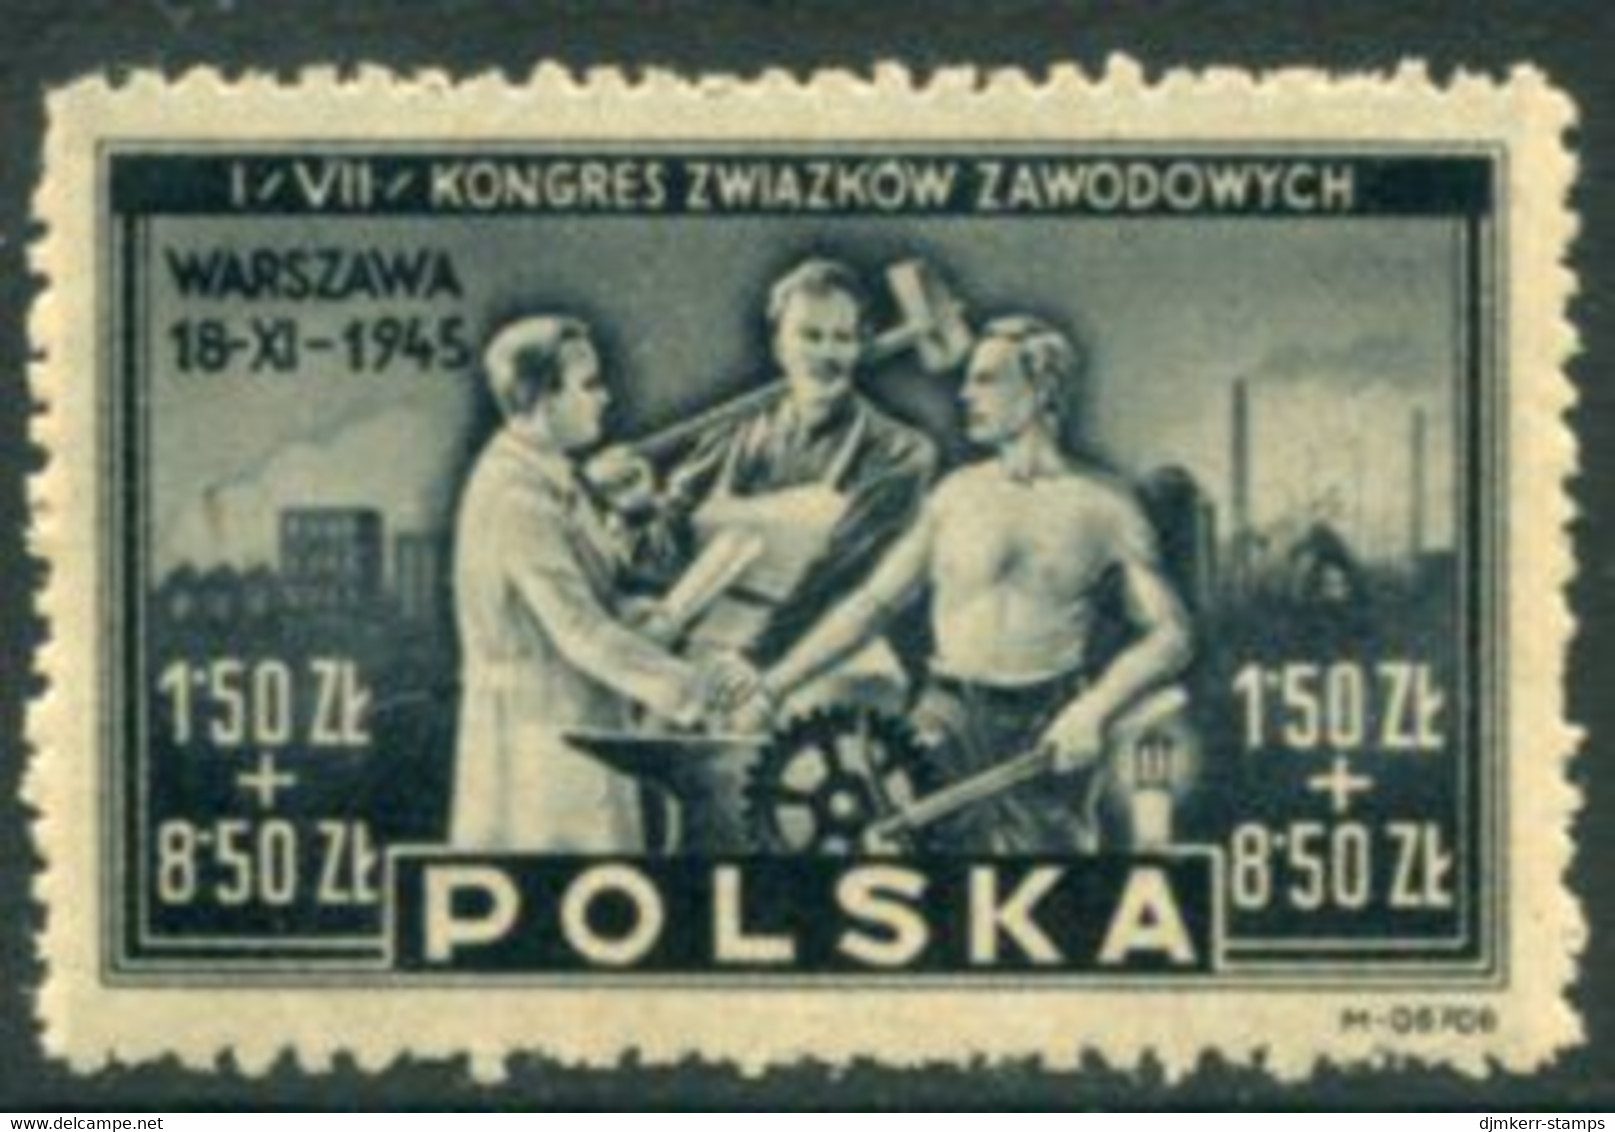 POLAND 1945 Trades Union Congress MNH / **.  Michel 413 - Nuevos